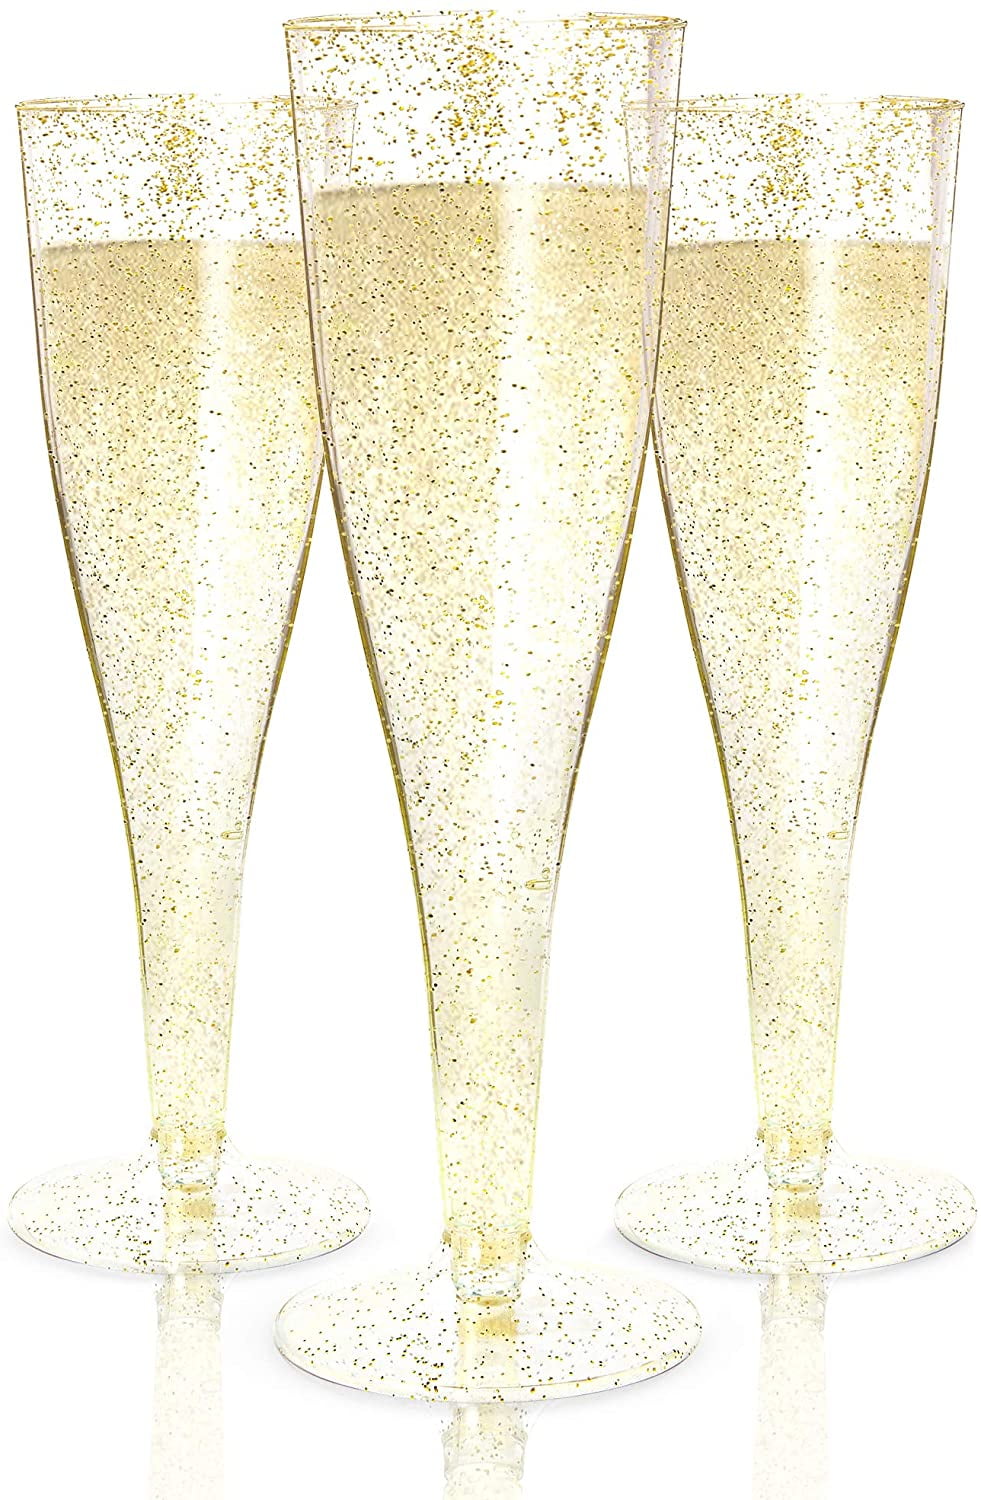 Bulk Champagne Glasses for Wedding or Party 48 Plastic Gold Glitter Champagne Flutes 